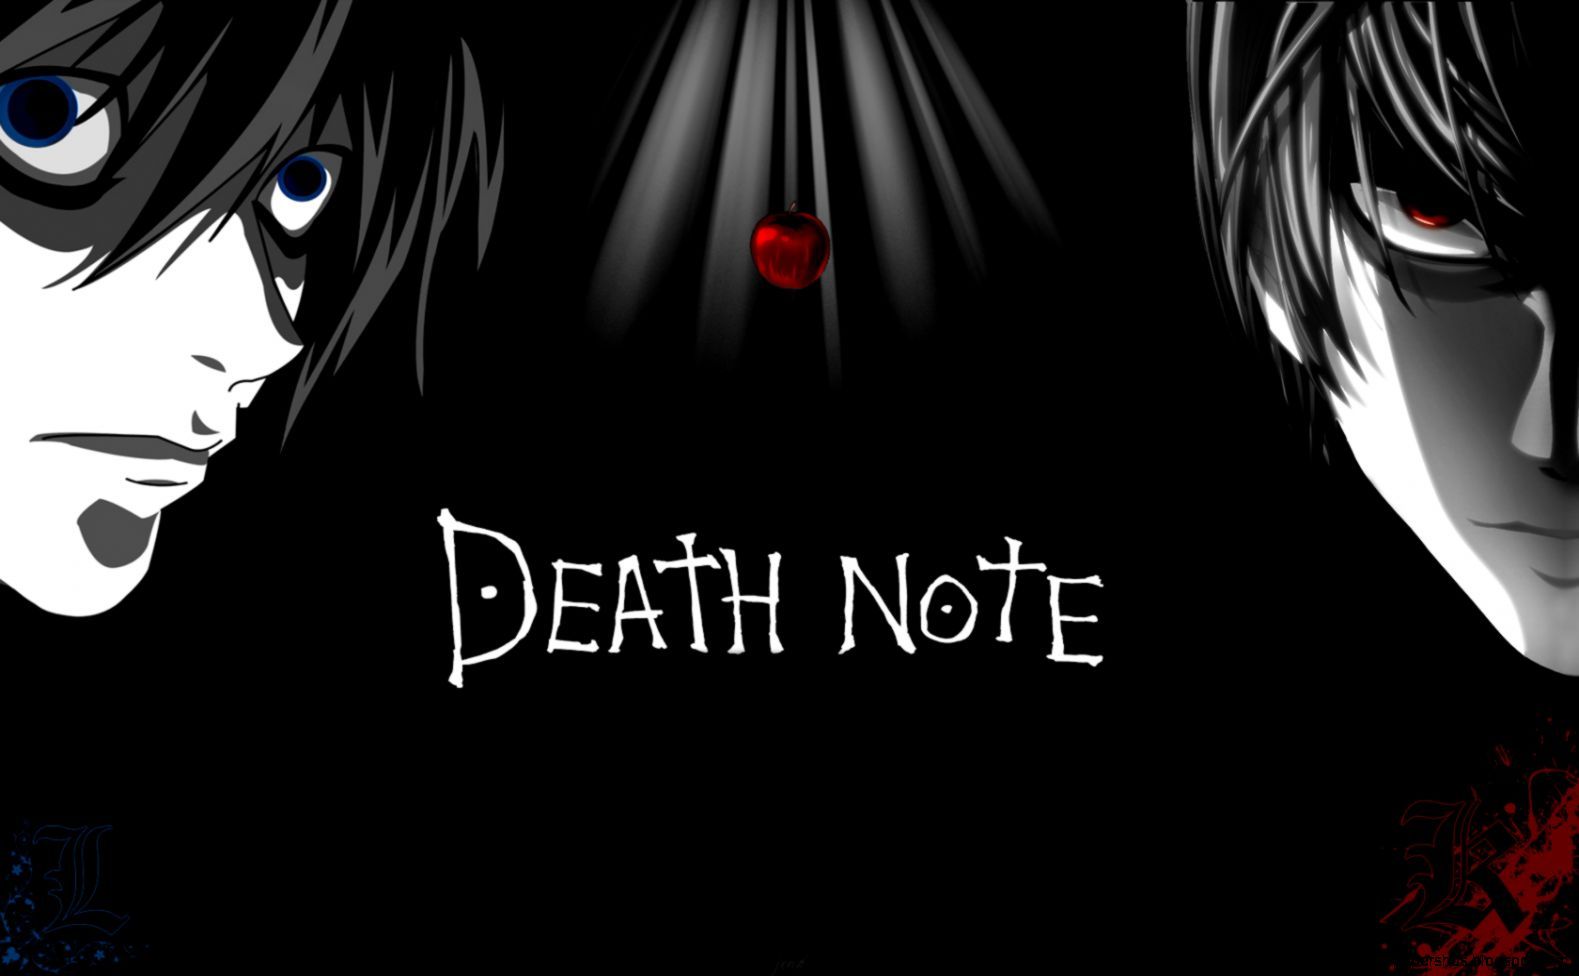 Death Note Wallpaper Hd, Buy Now, Flash Sales, 58% OFF